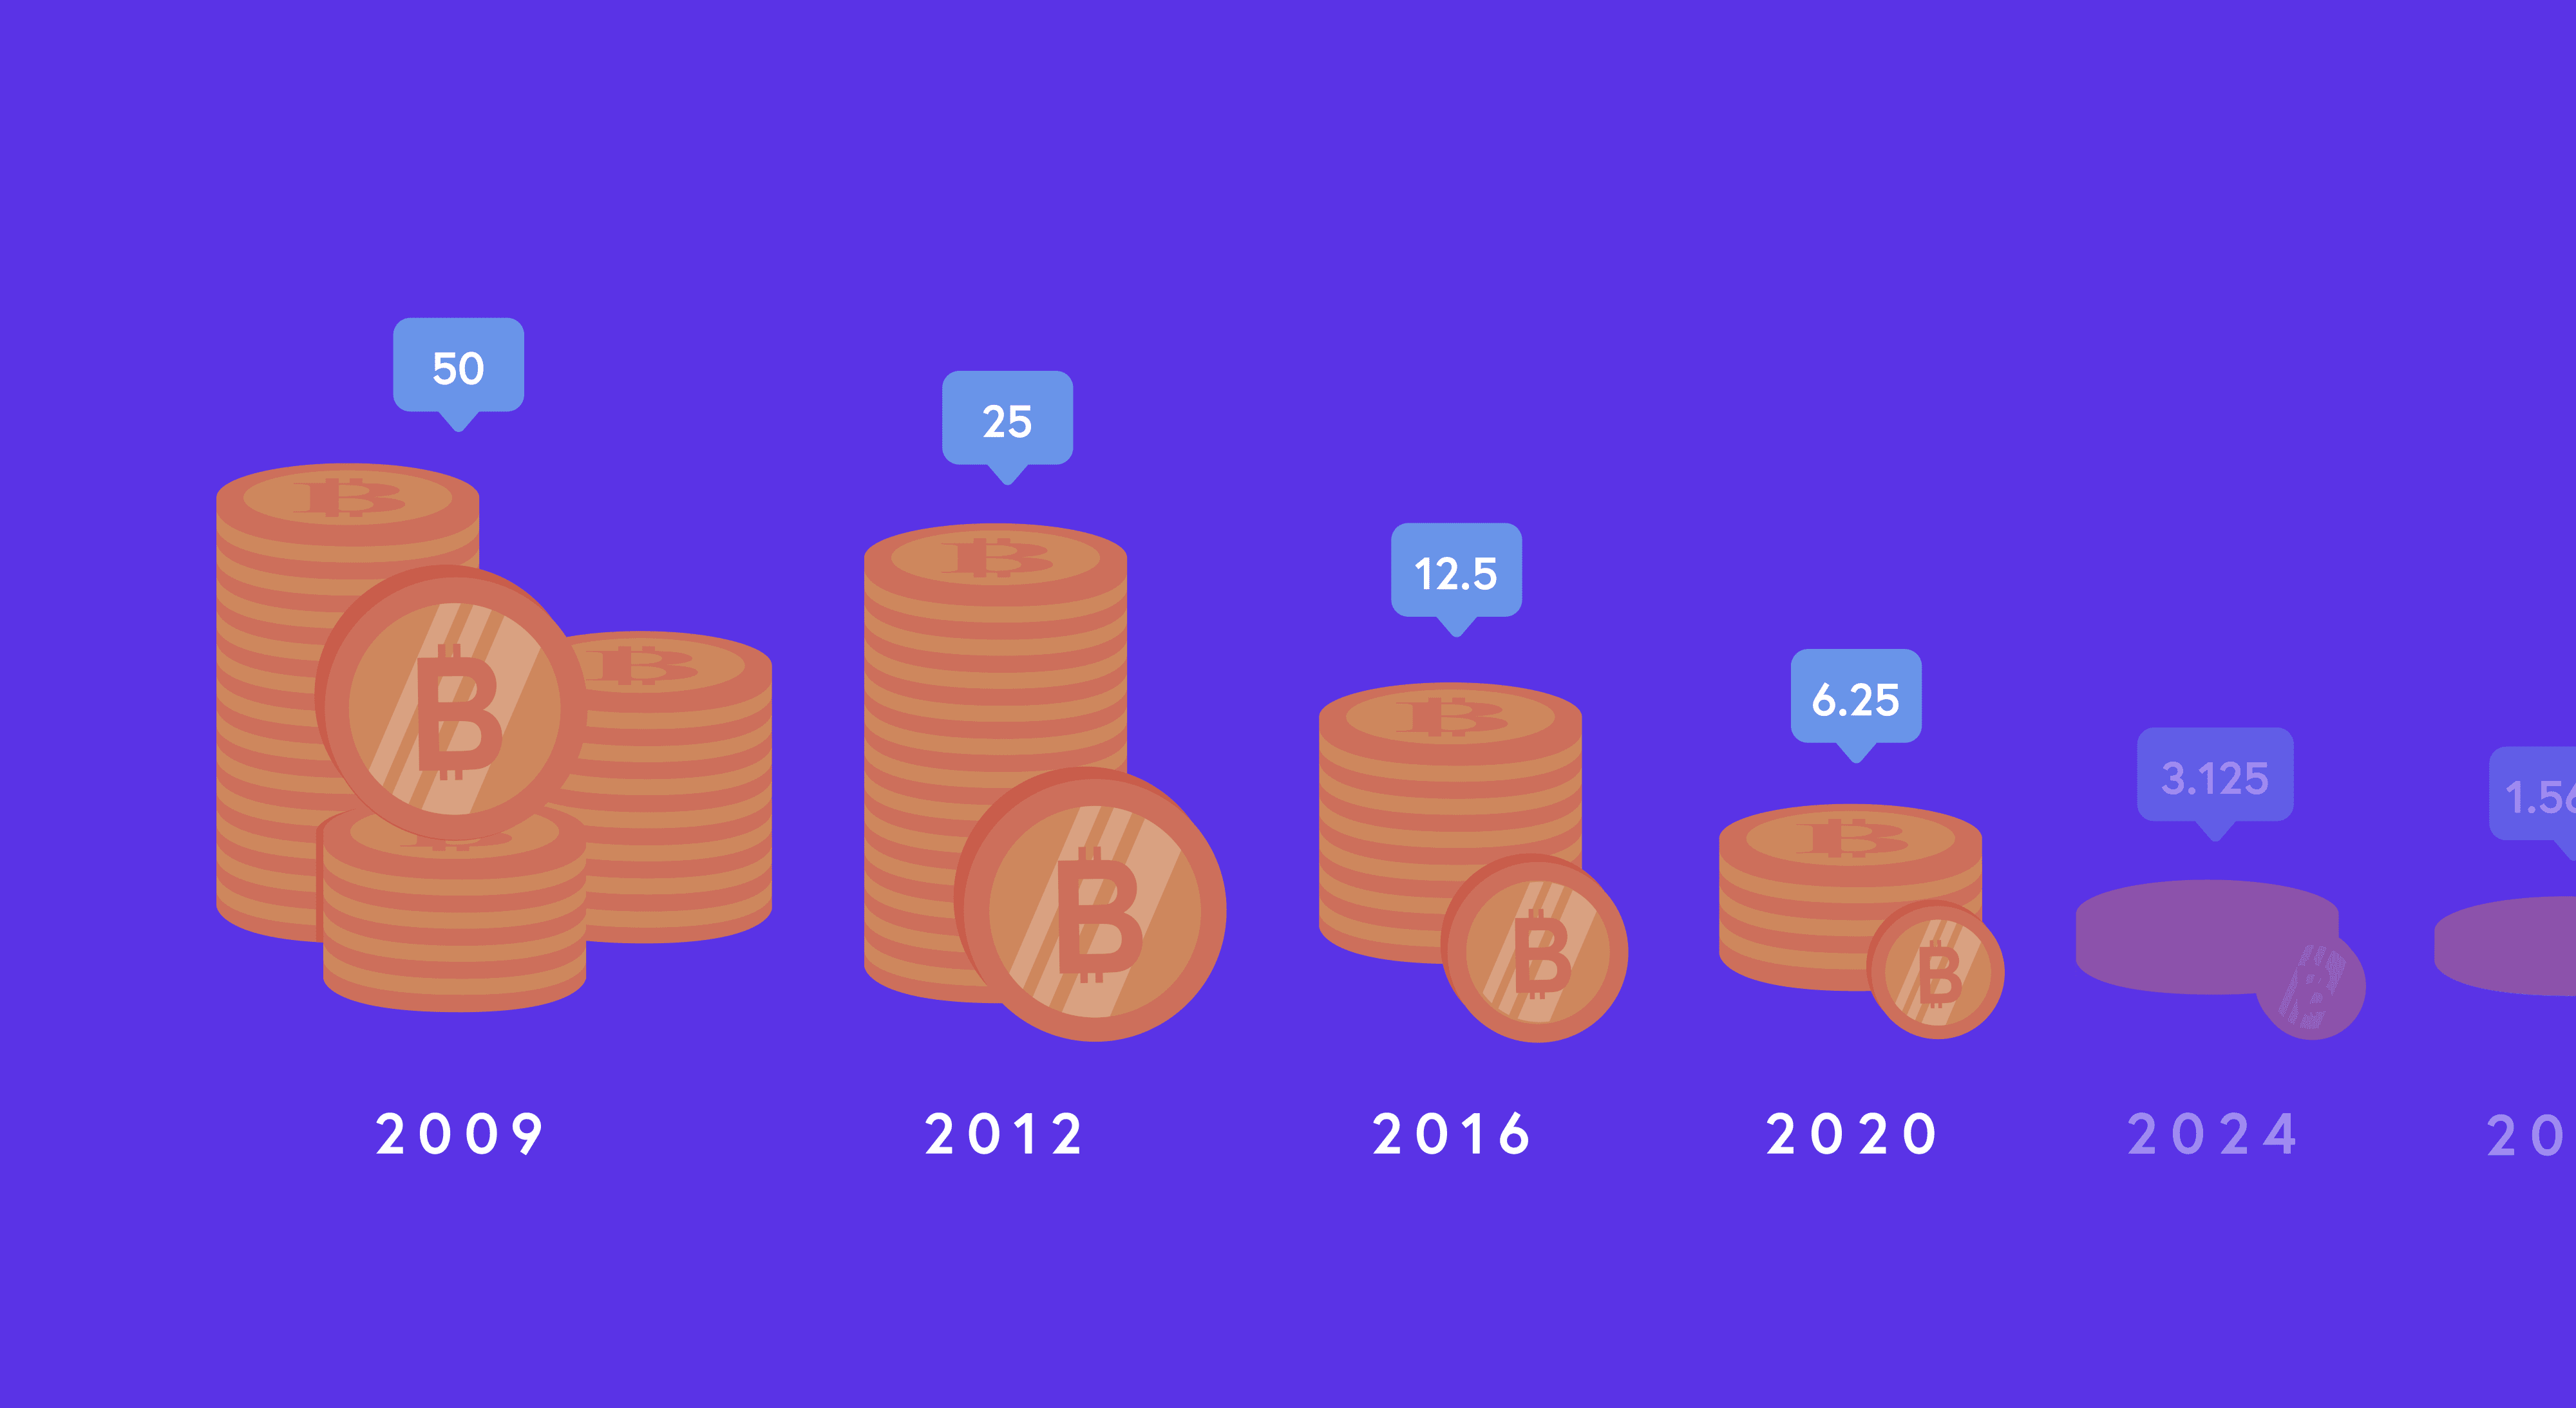 Bitcoin stacks showing mining rewards decreasing after each halvening event